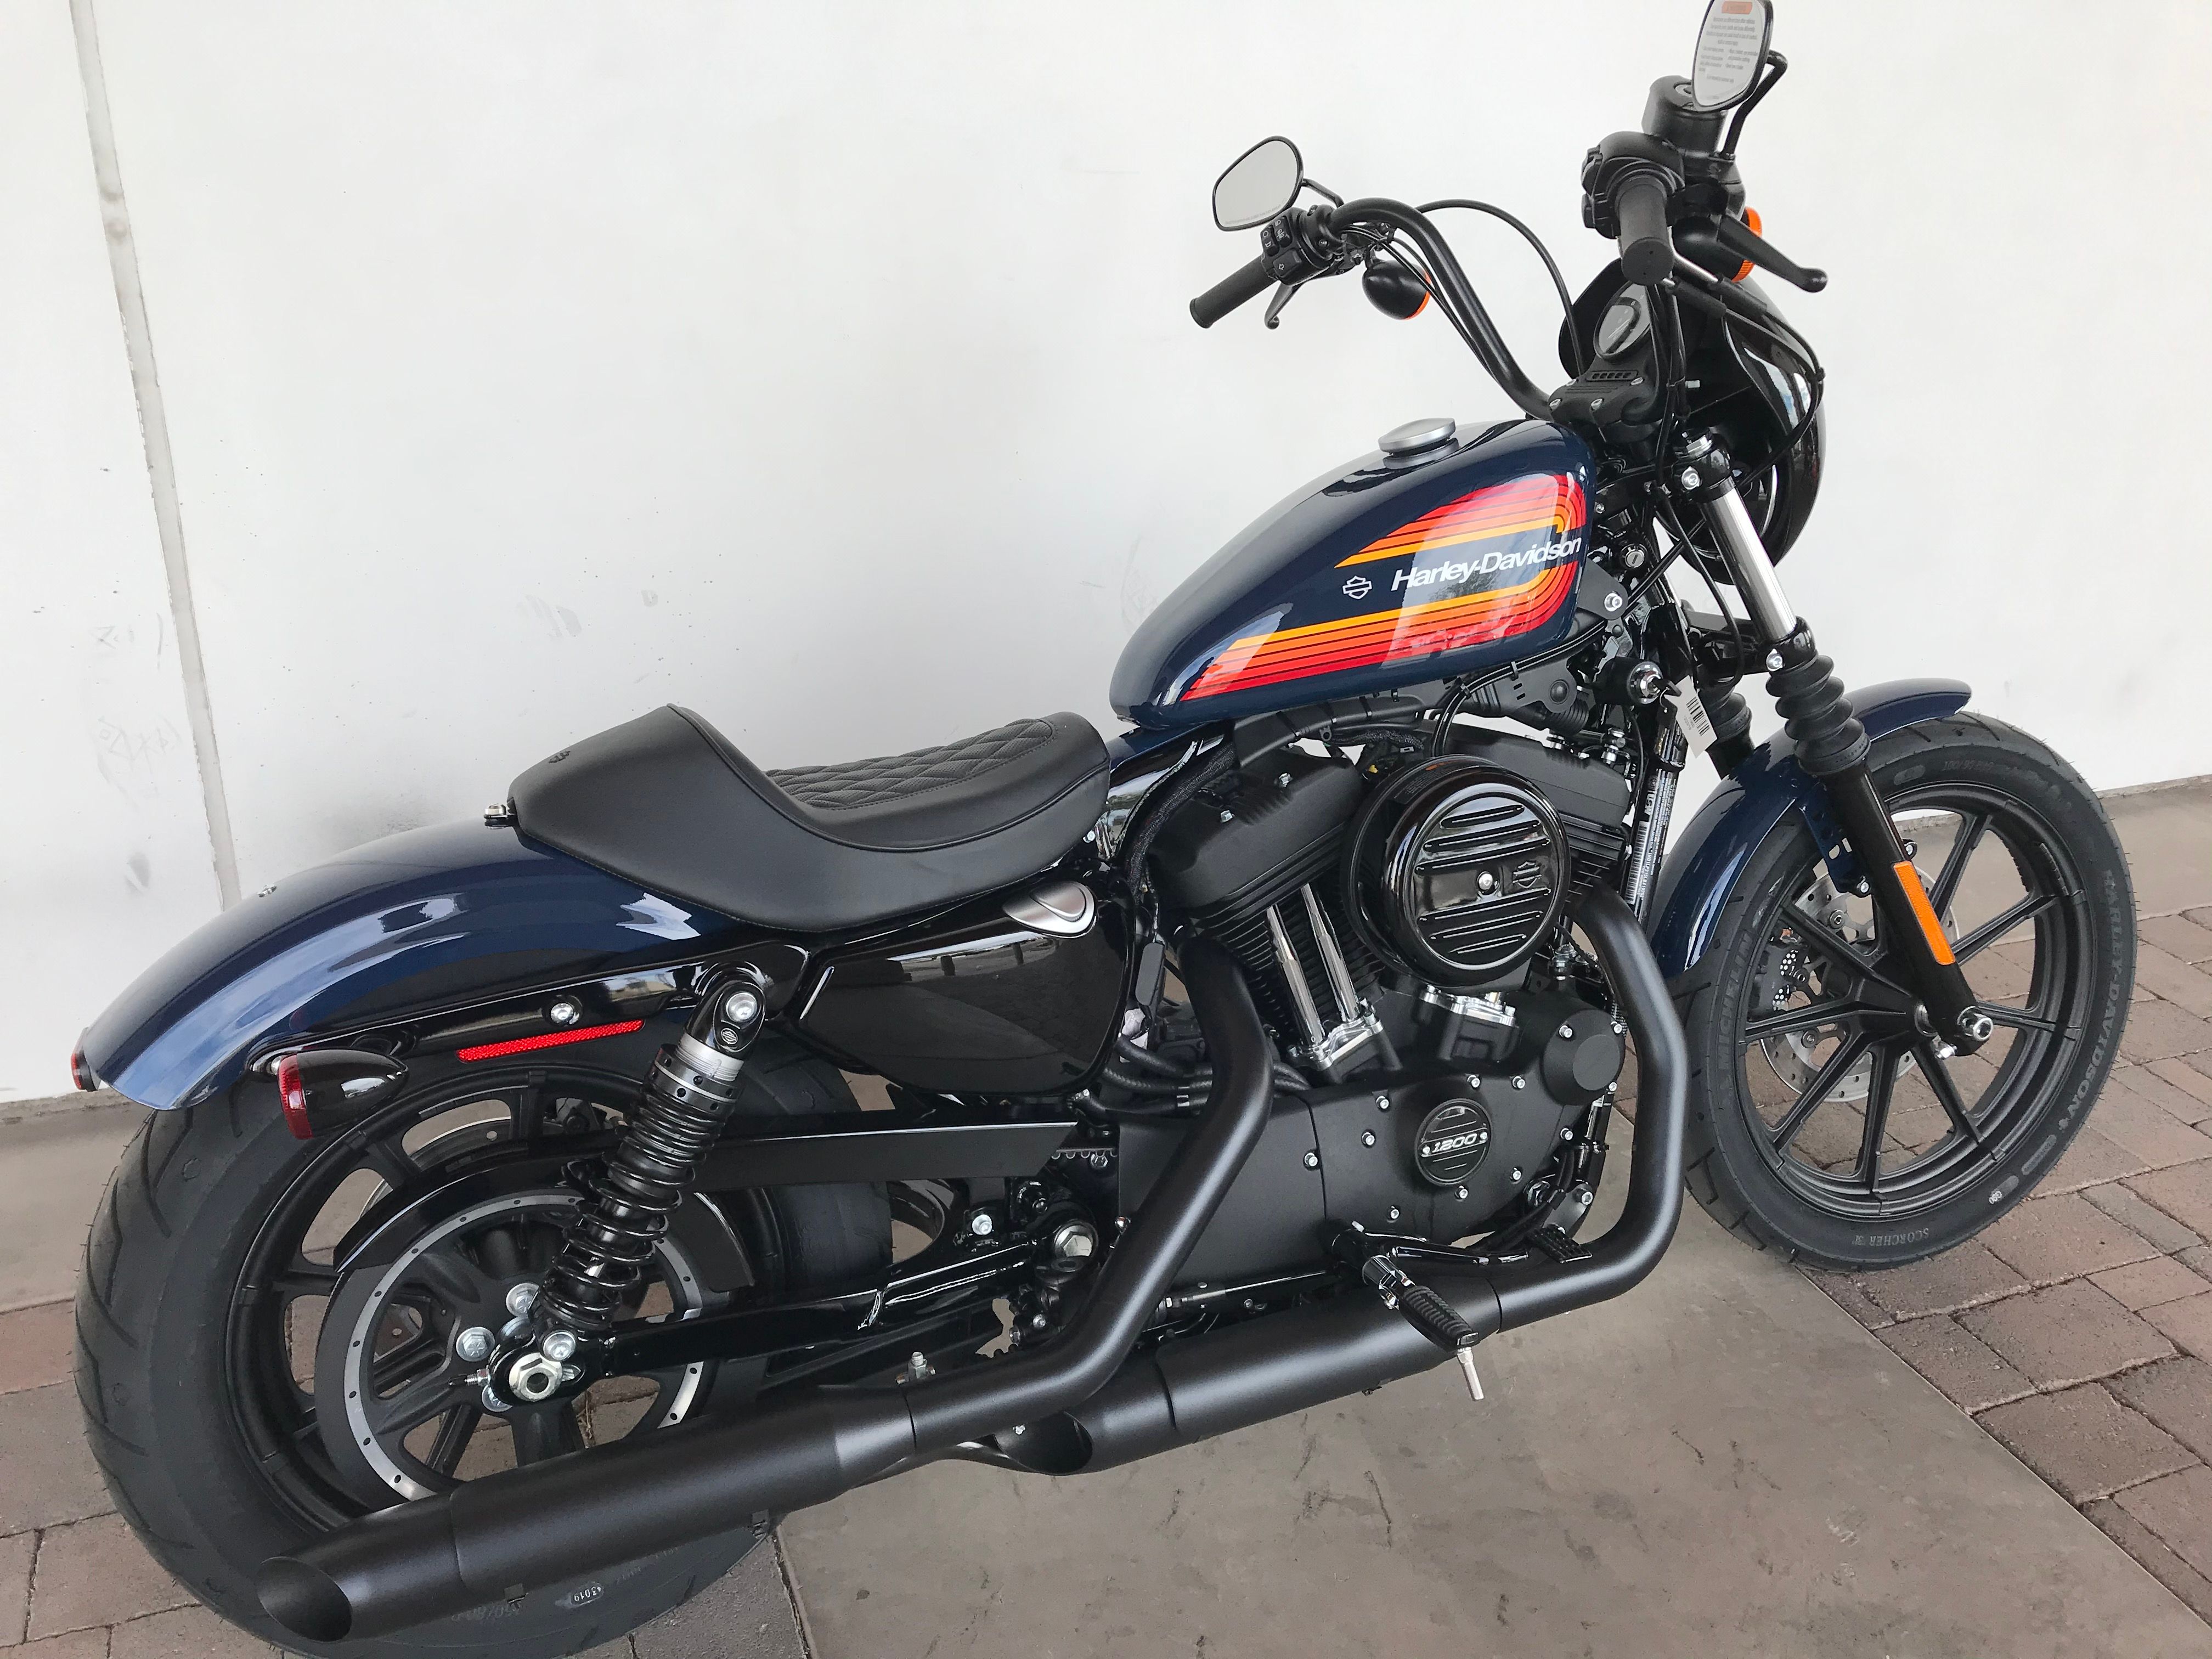 New 2020 Harley-Davidson Iron 1200 in Tucson #HD419252 | Harley-Davidson of Tucson